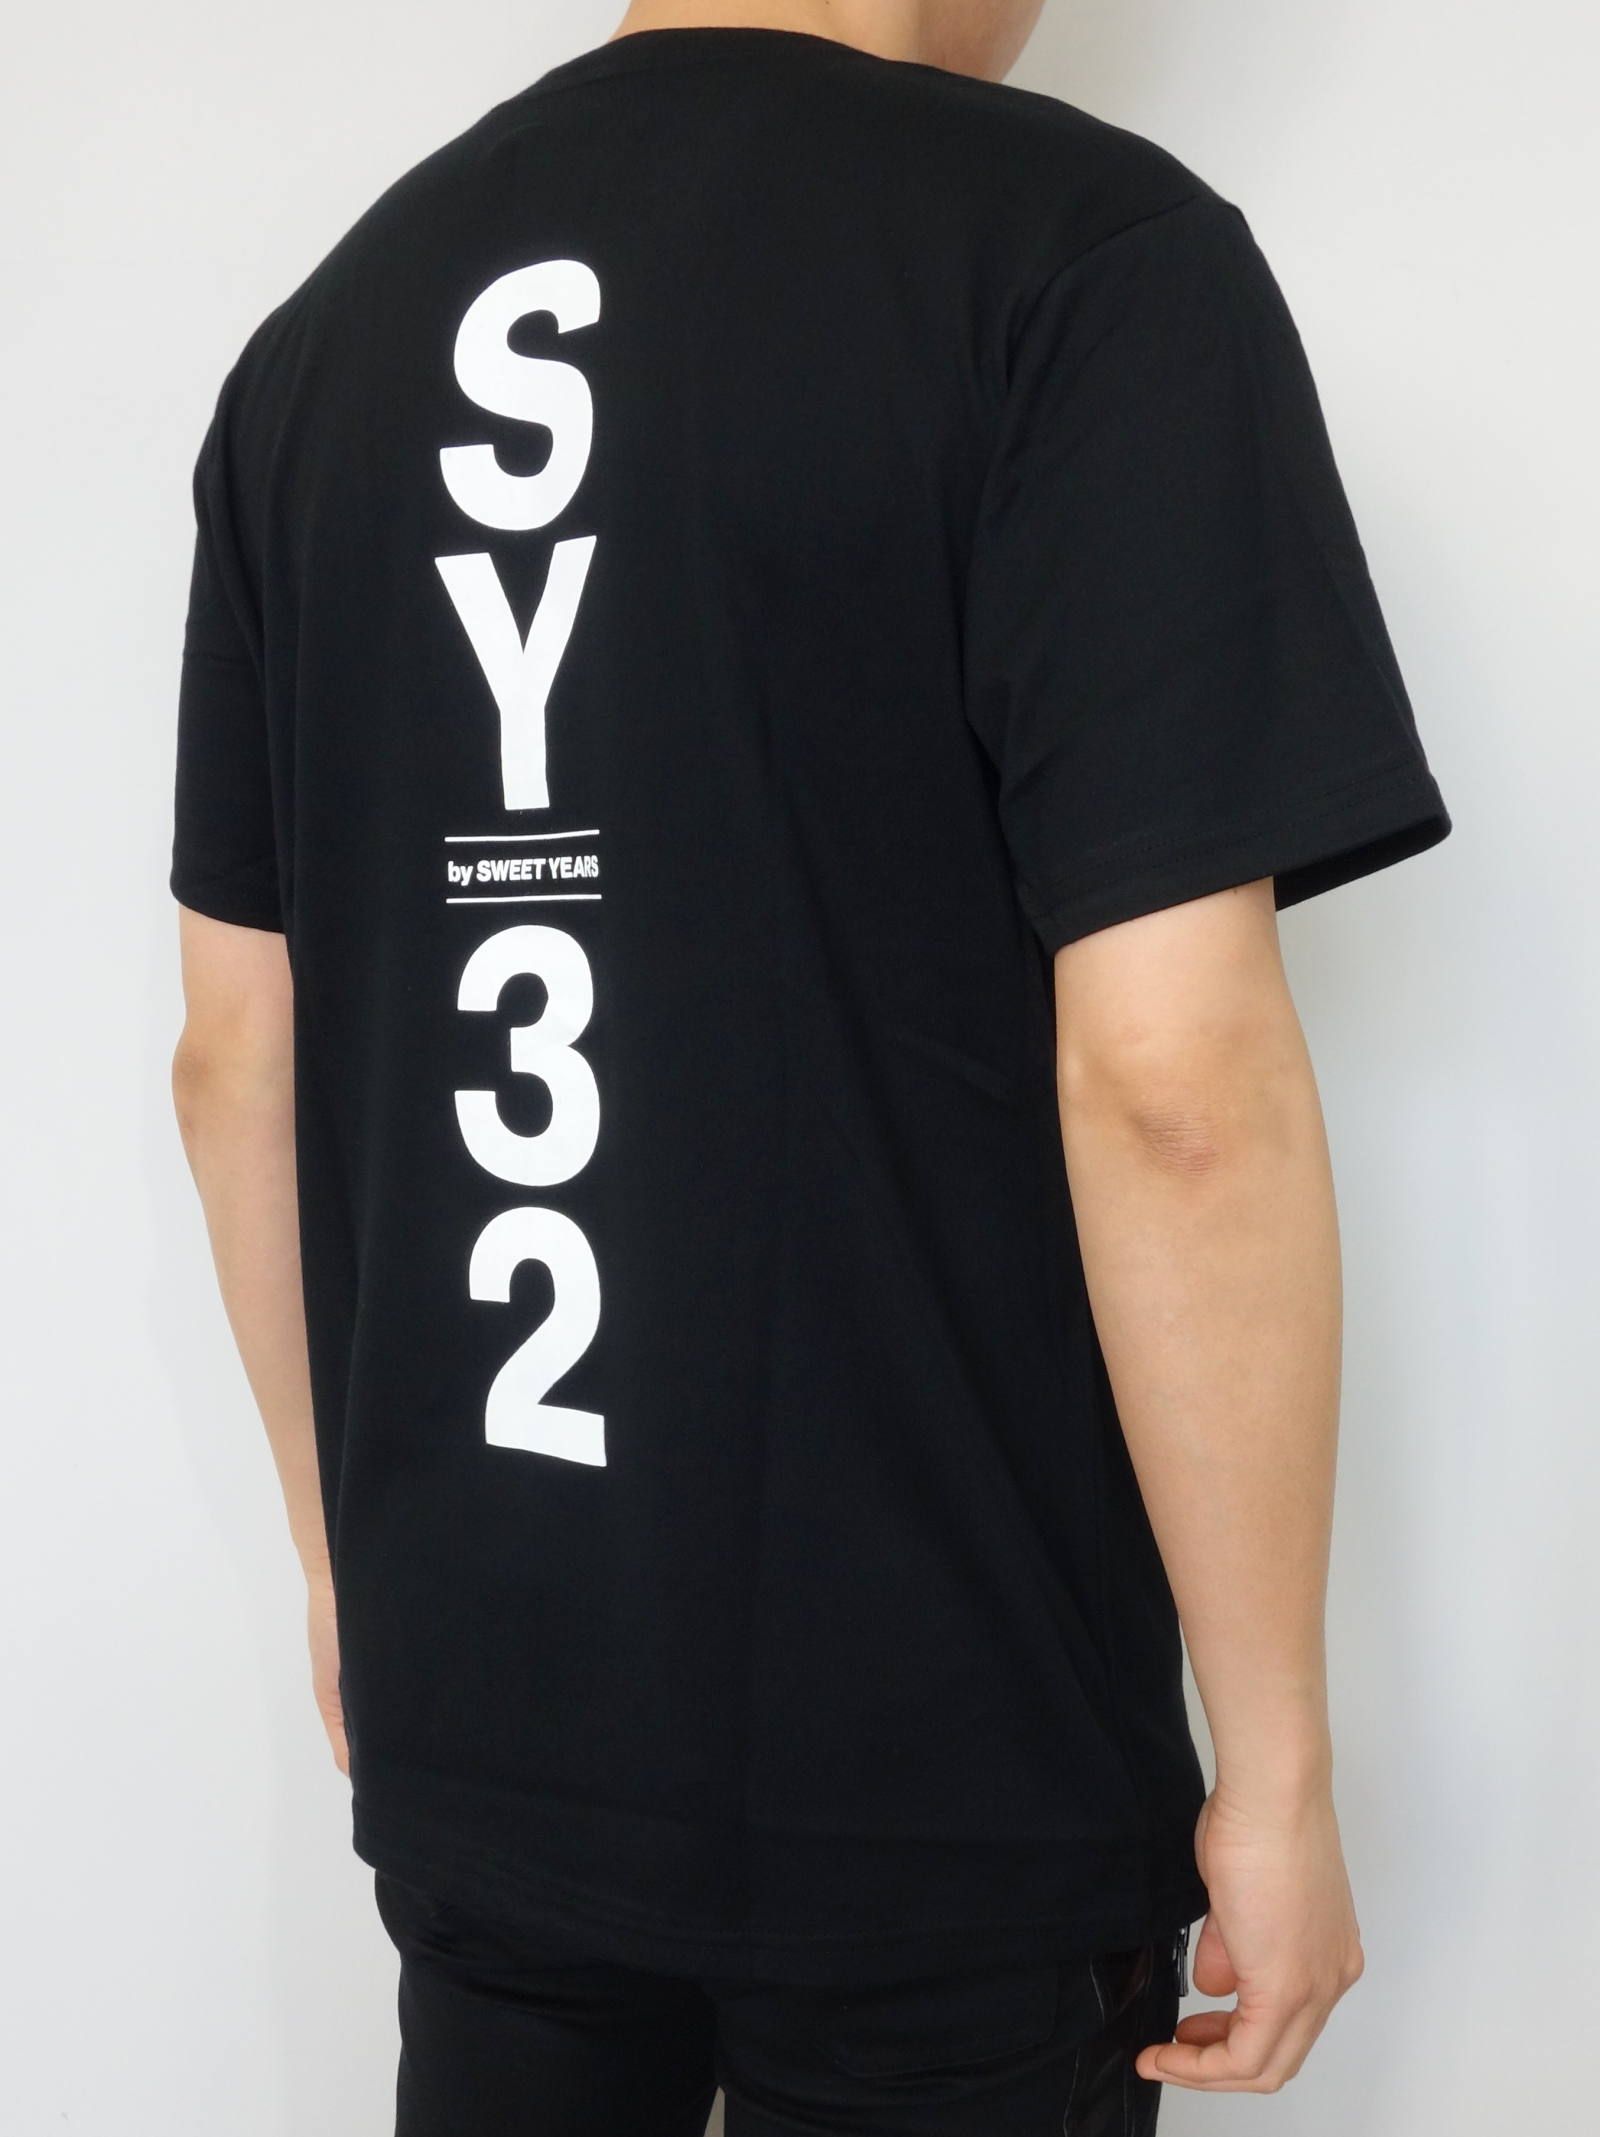 SY32 by SWEET YEARS - SHIELD LOGO TEE / TNS1722J / プリントTシャツ